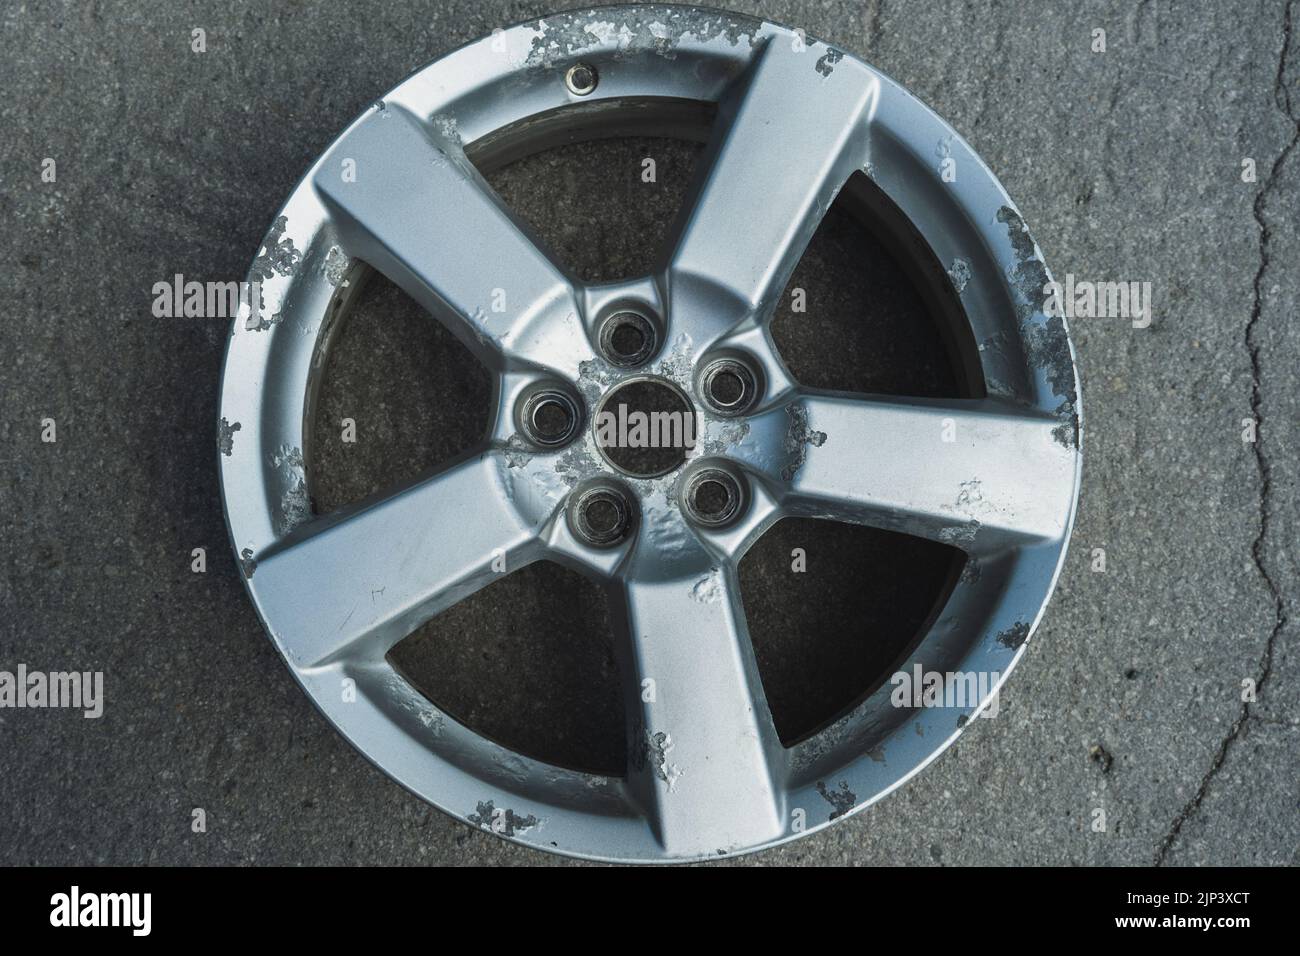 Corrosion on a silver aluminum alloy wheel close-up Stock Photo